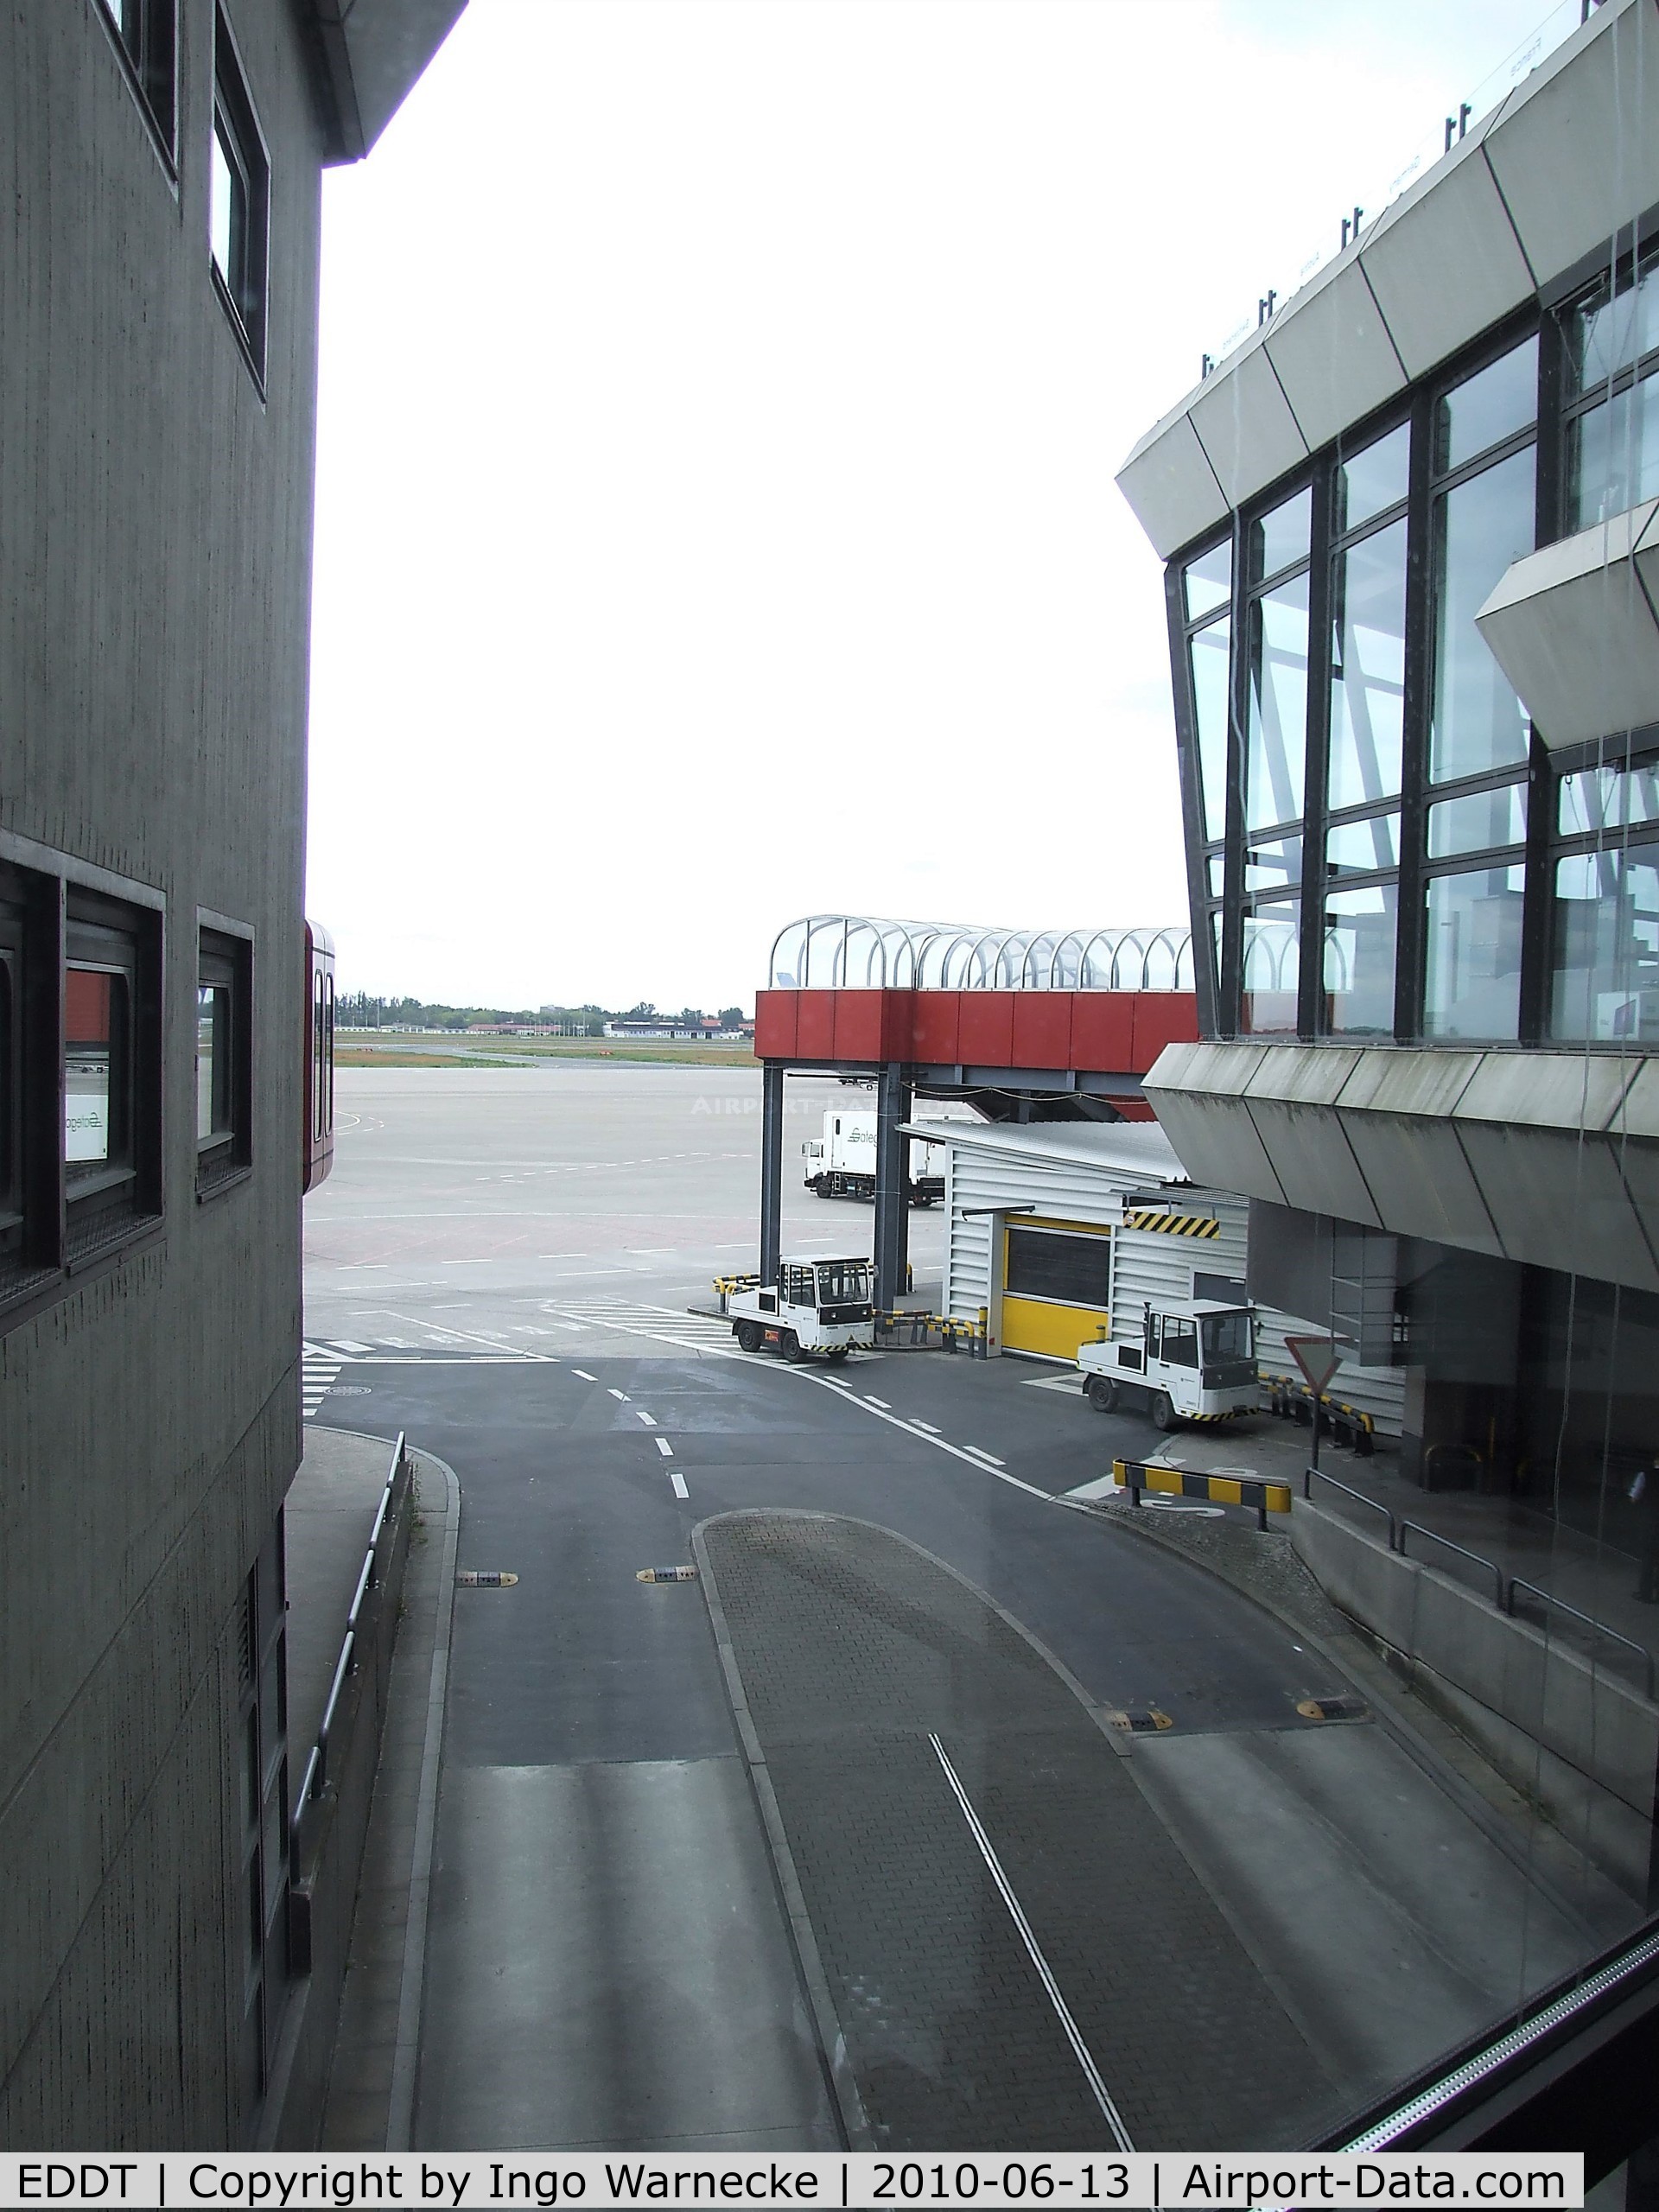 Tegel International Airport (closing in 2011), Berlin Germany (EDDT) - view of the apron between two terminal buildings at Berlin Tegel airport